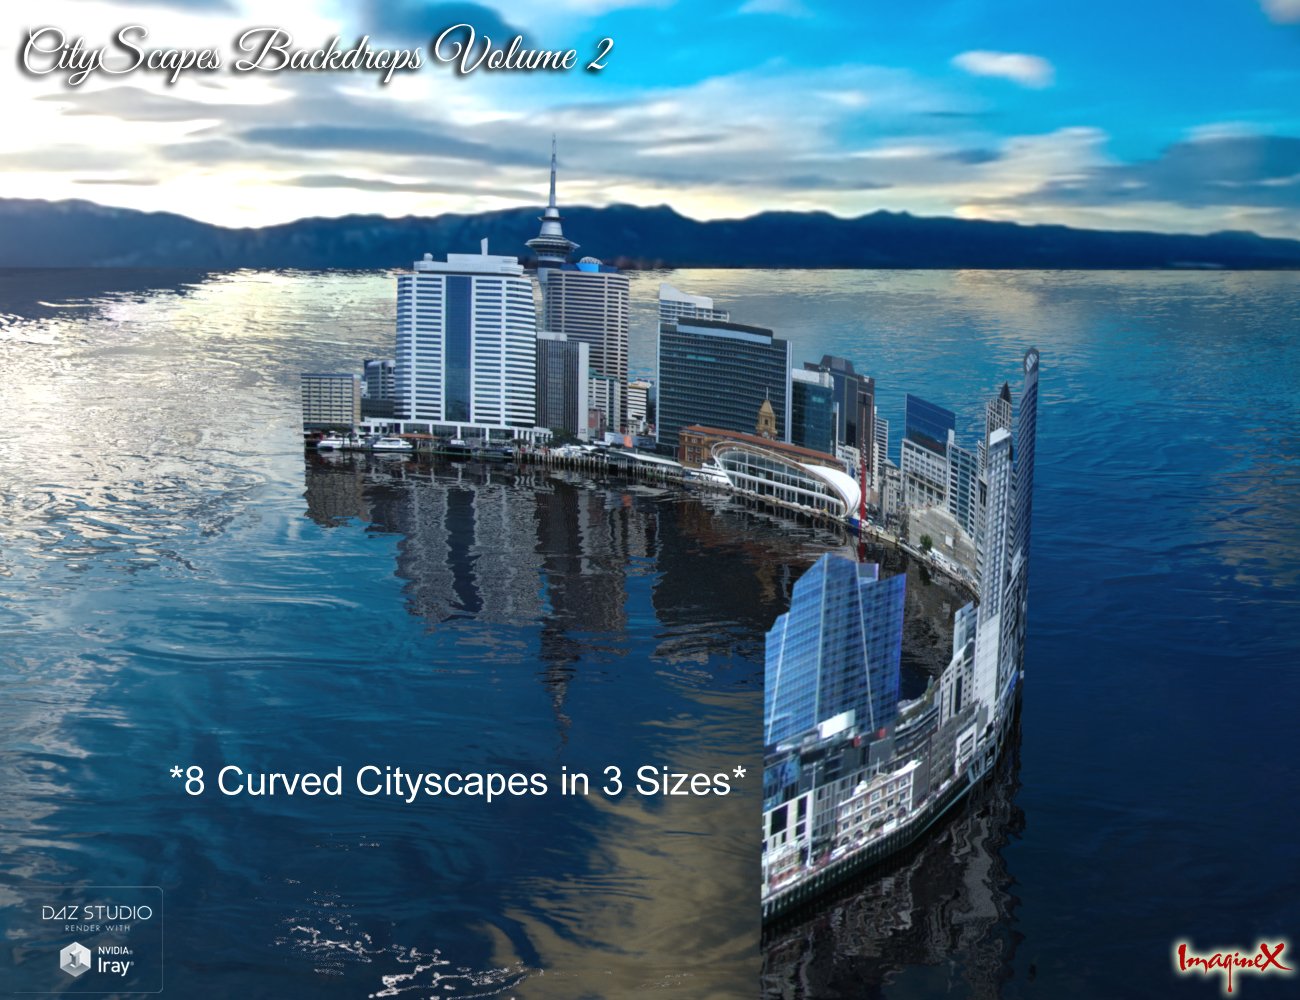 CityScapes Backdrops Volume 2 by: ImagineX, 3D Models by Daz 3D